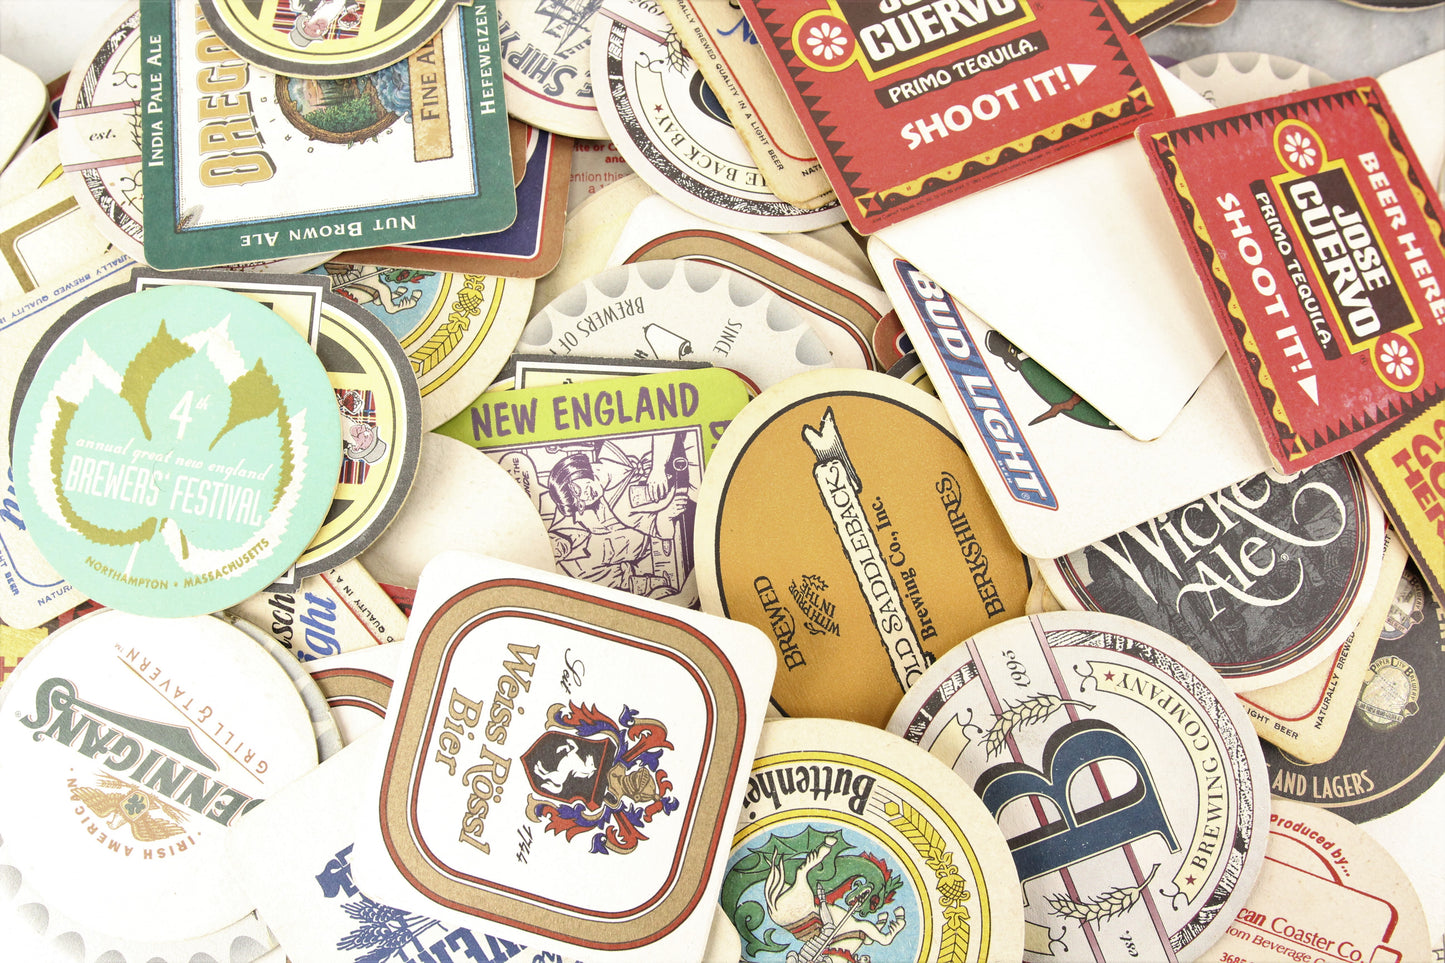 Assorted Vintage Bar Beer Cardboard Coasters